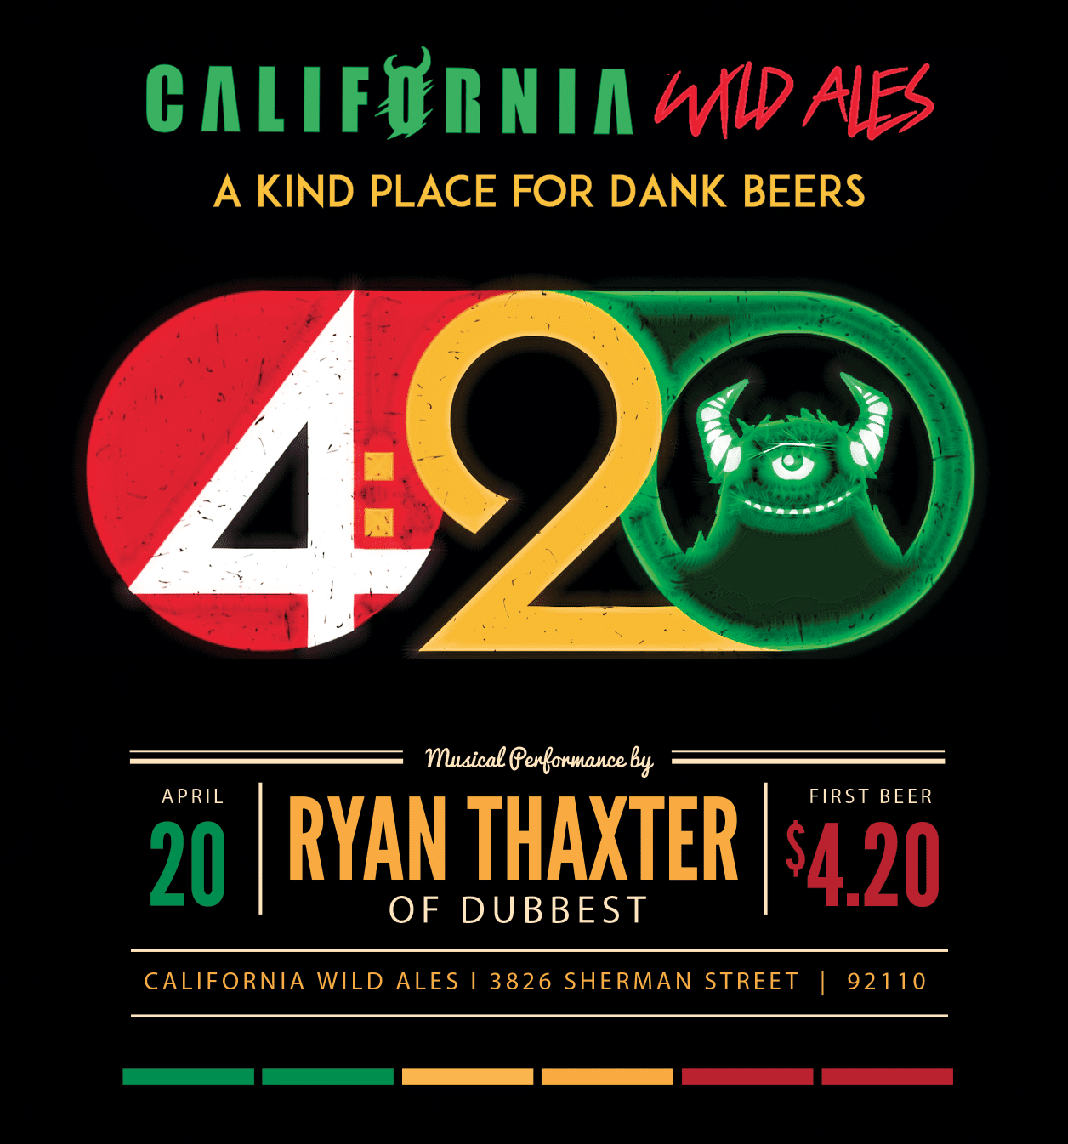 420 Celebration at California Wild Ales